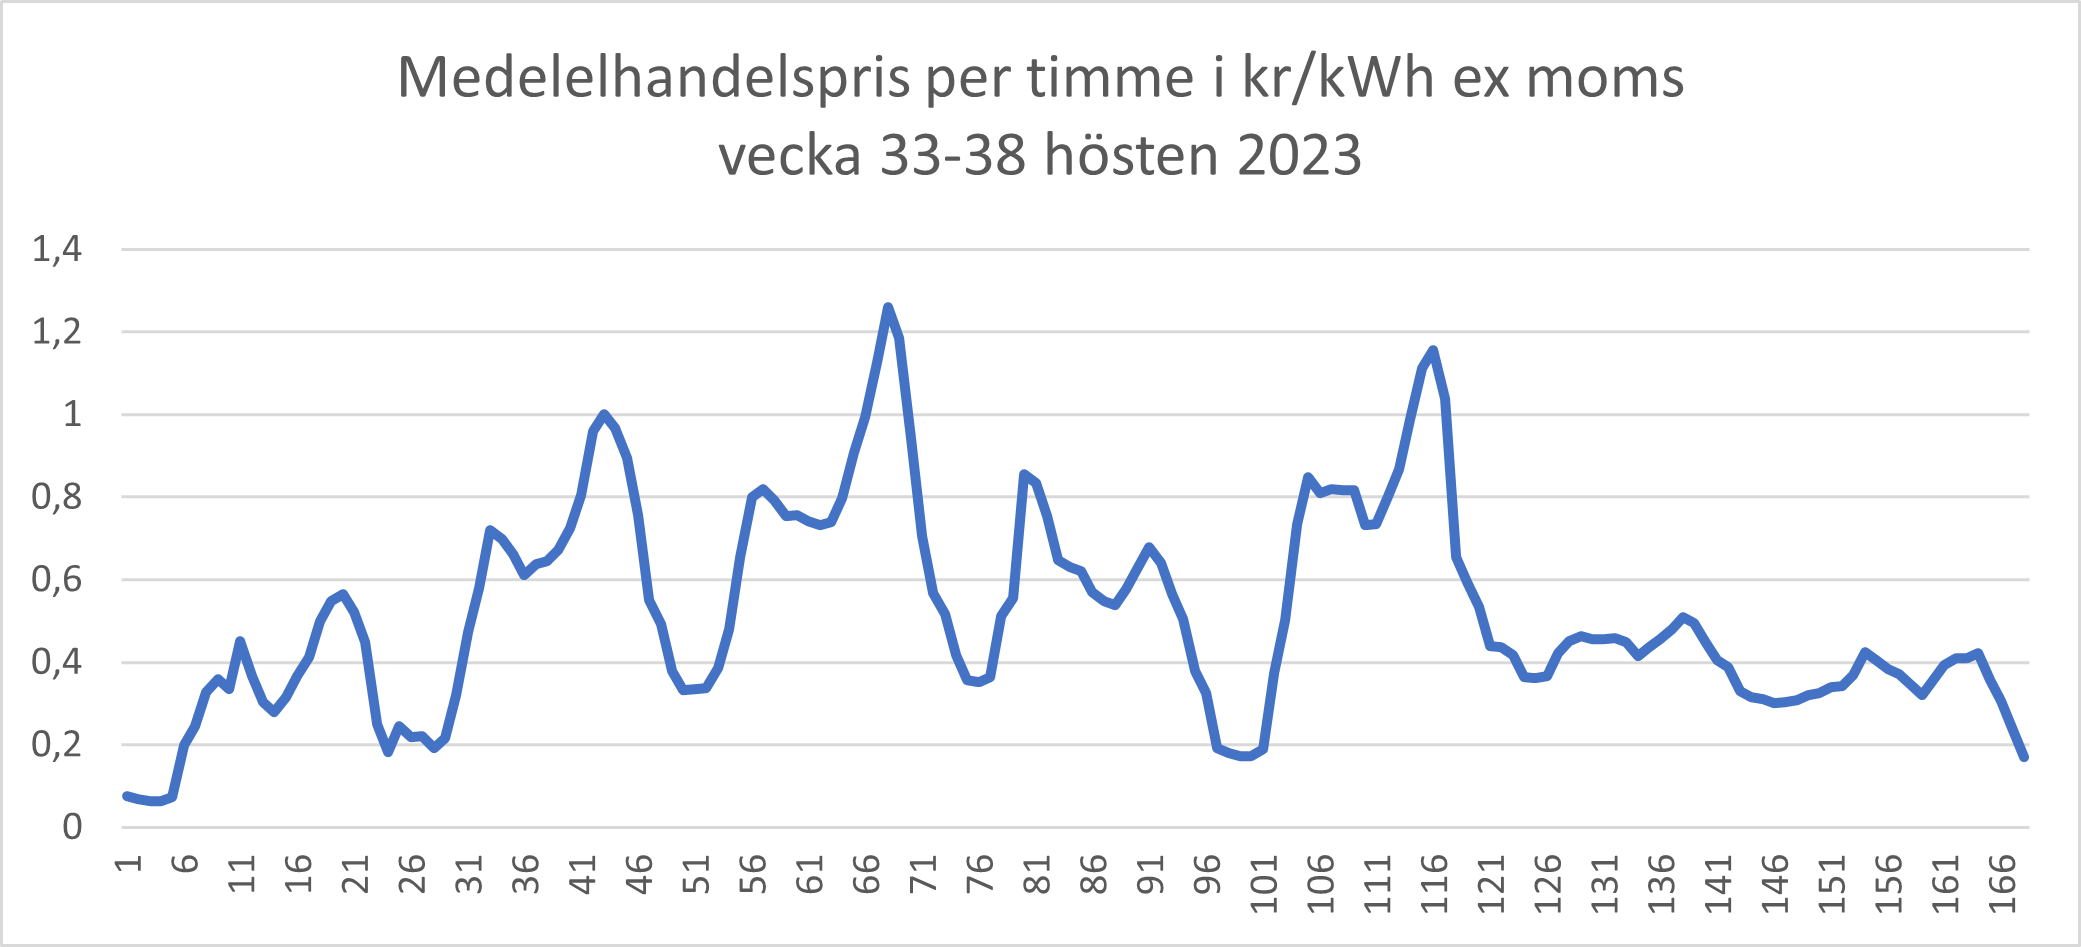 Graf över medelelhandelspris per timme vecka 33-38 hösten 2023